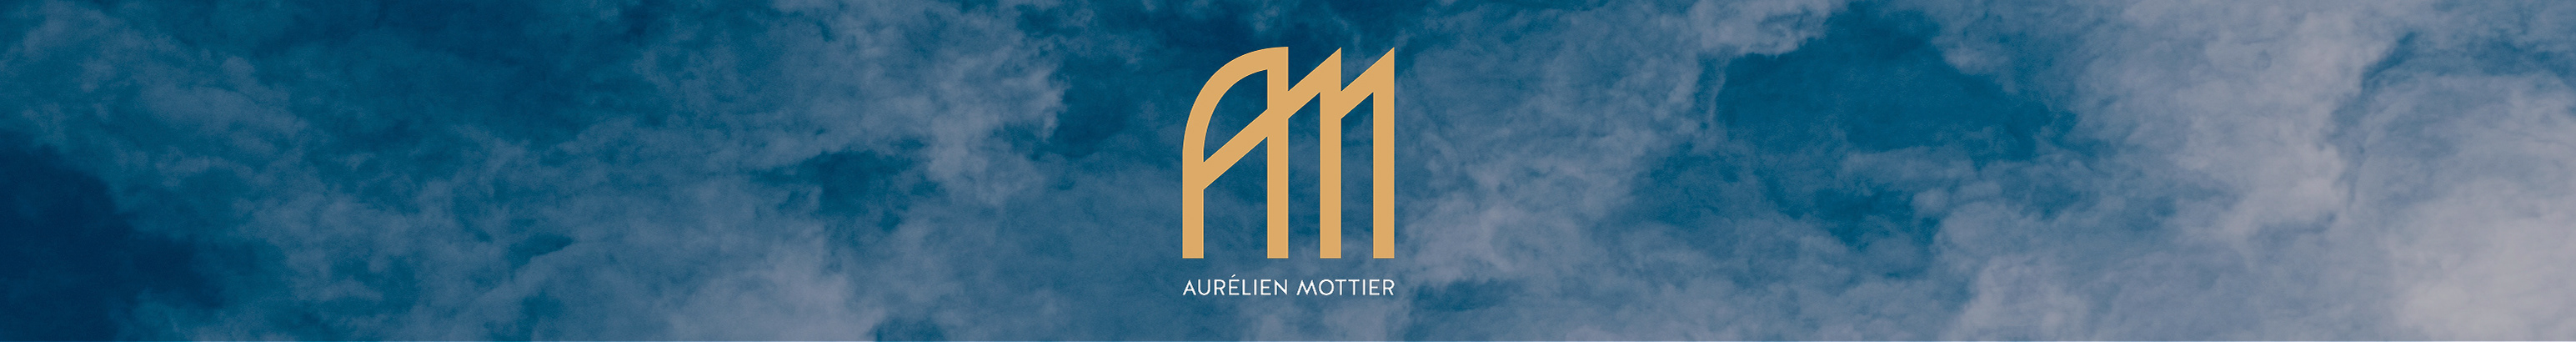 Banner de perfil de Aurélien Mottier